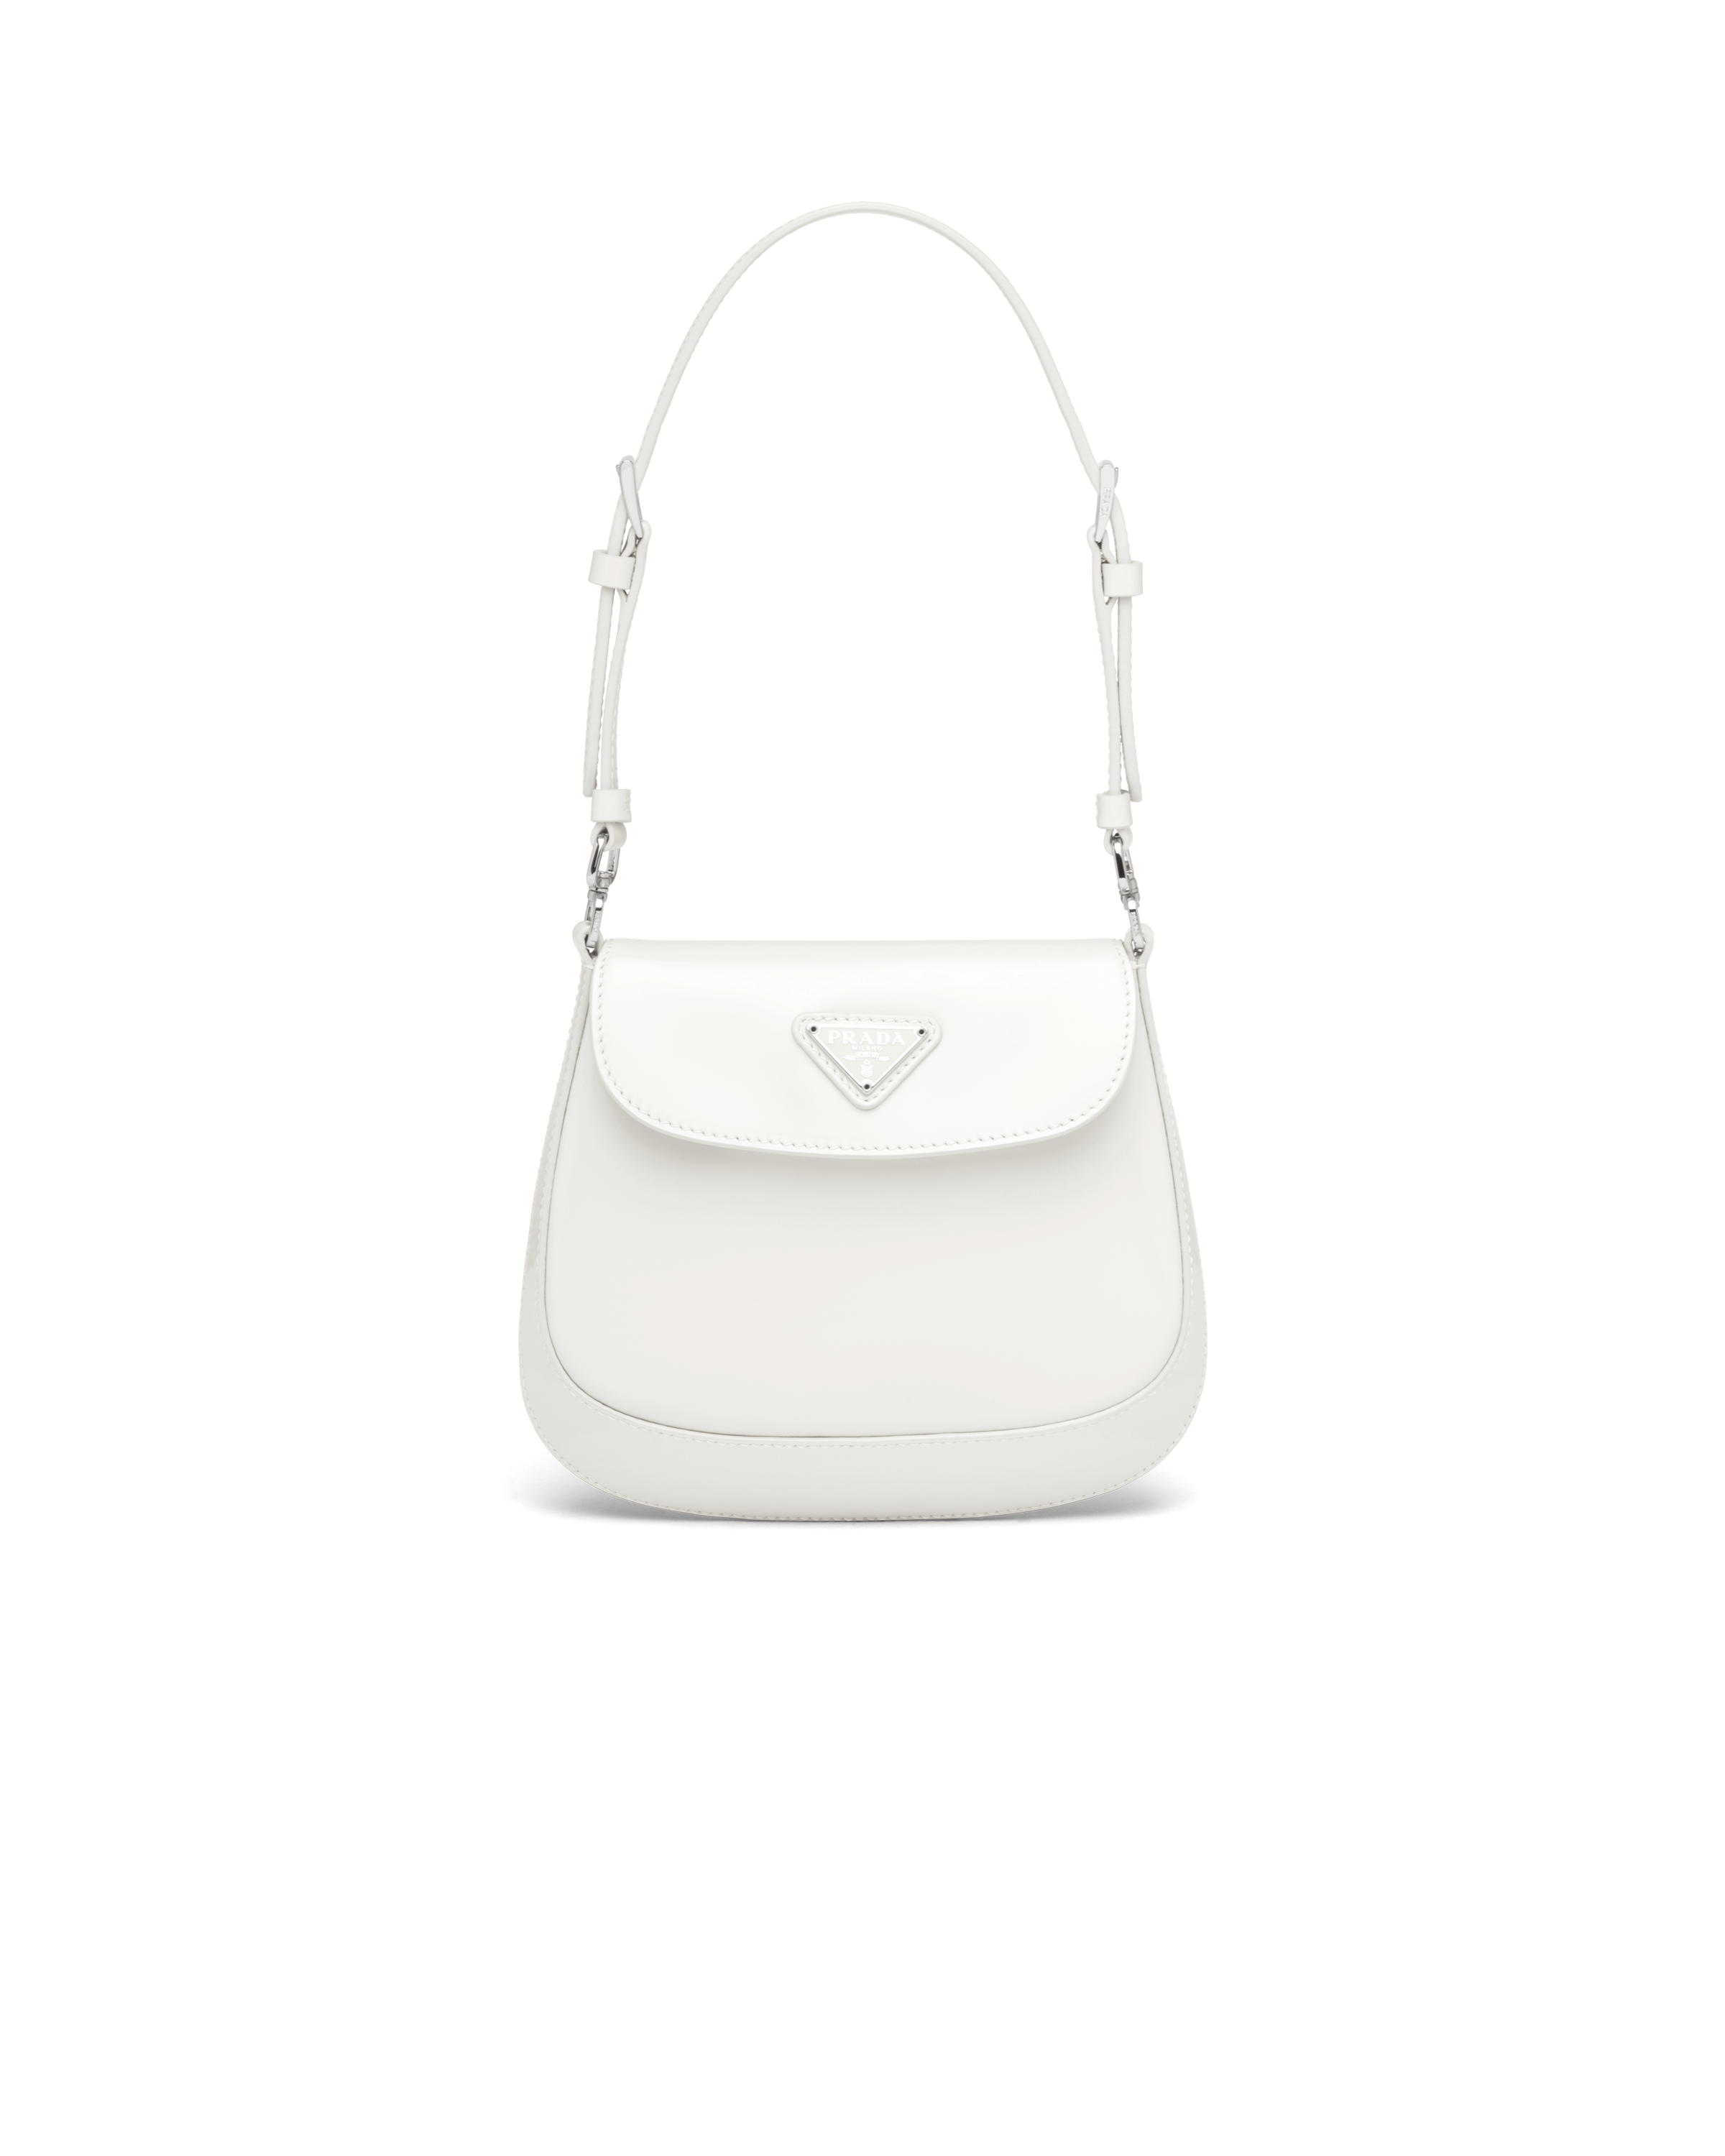 Prada Cleo Brushed Leather Mini Bag, Women, White